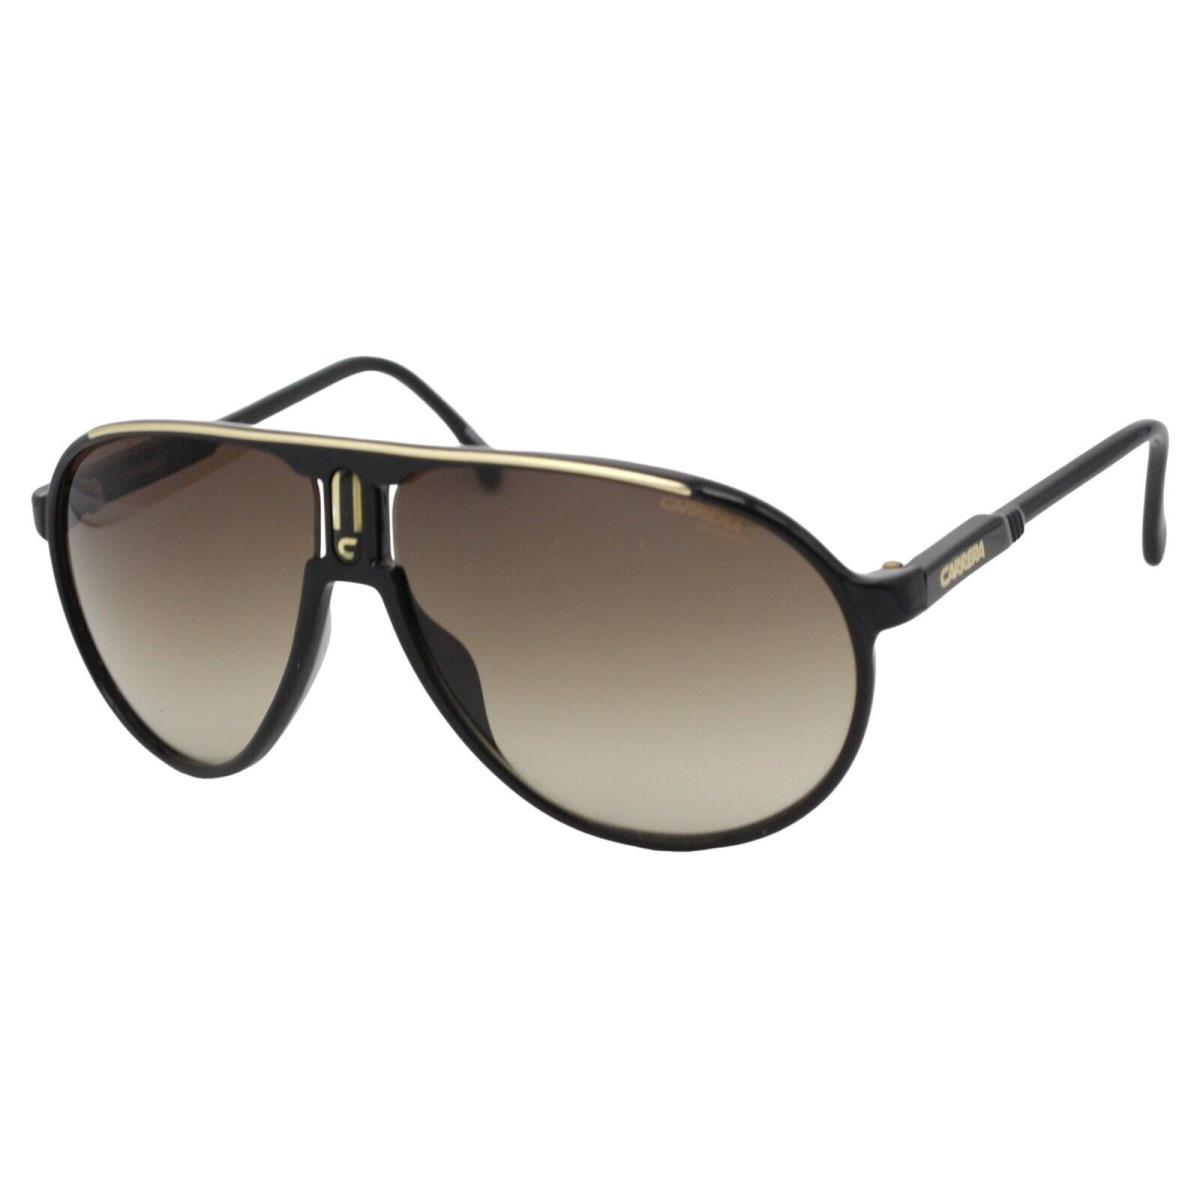 Carrera Champion/n 807 Shiny Black Gold Men s Gradient Sunglasses 62-12-125 Case - Black, Frame: Shiny Black Gold, Lens: Brown